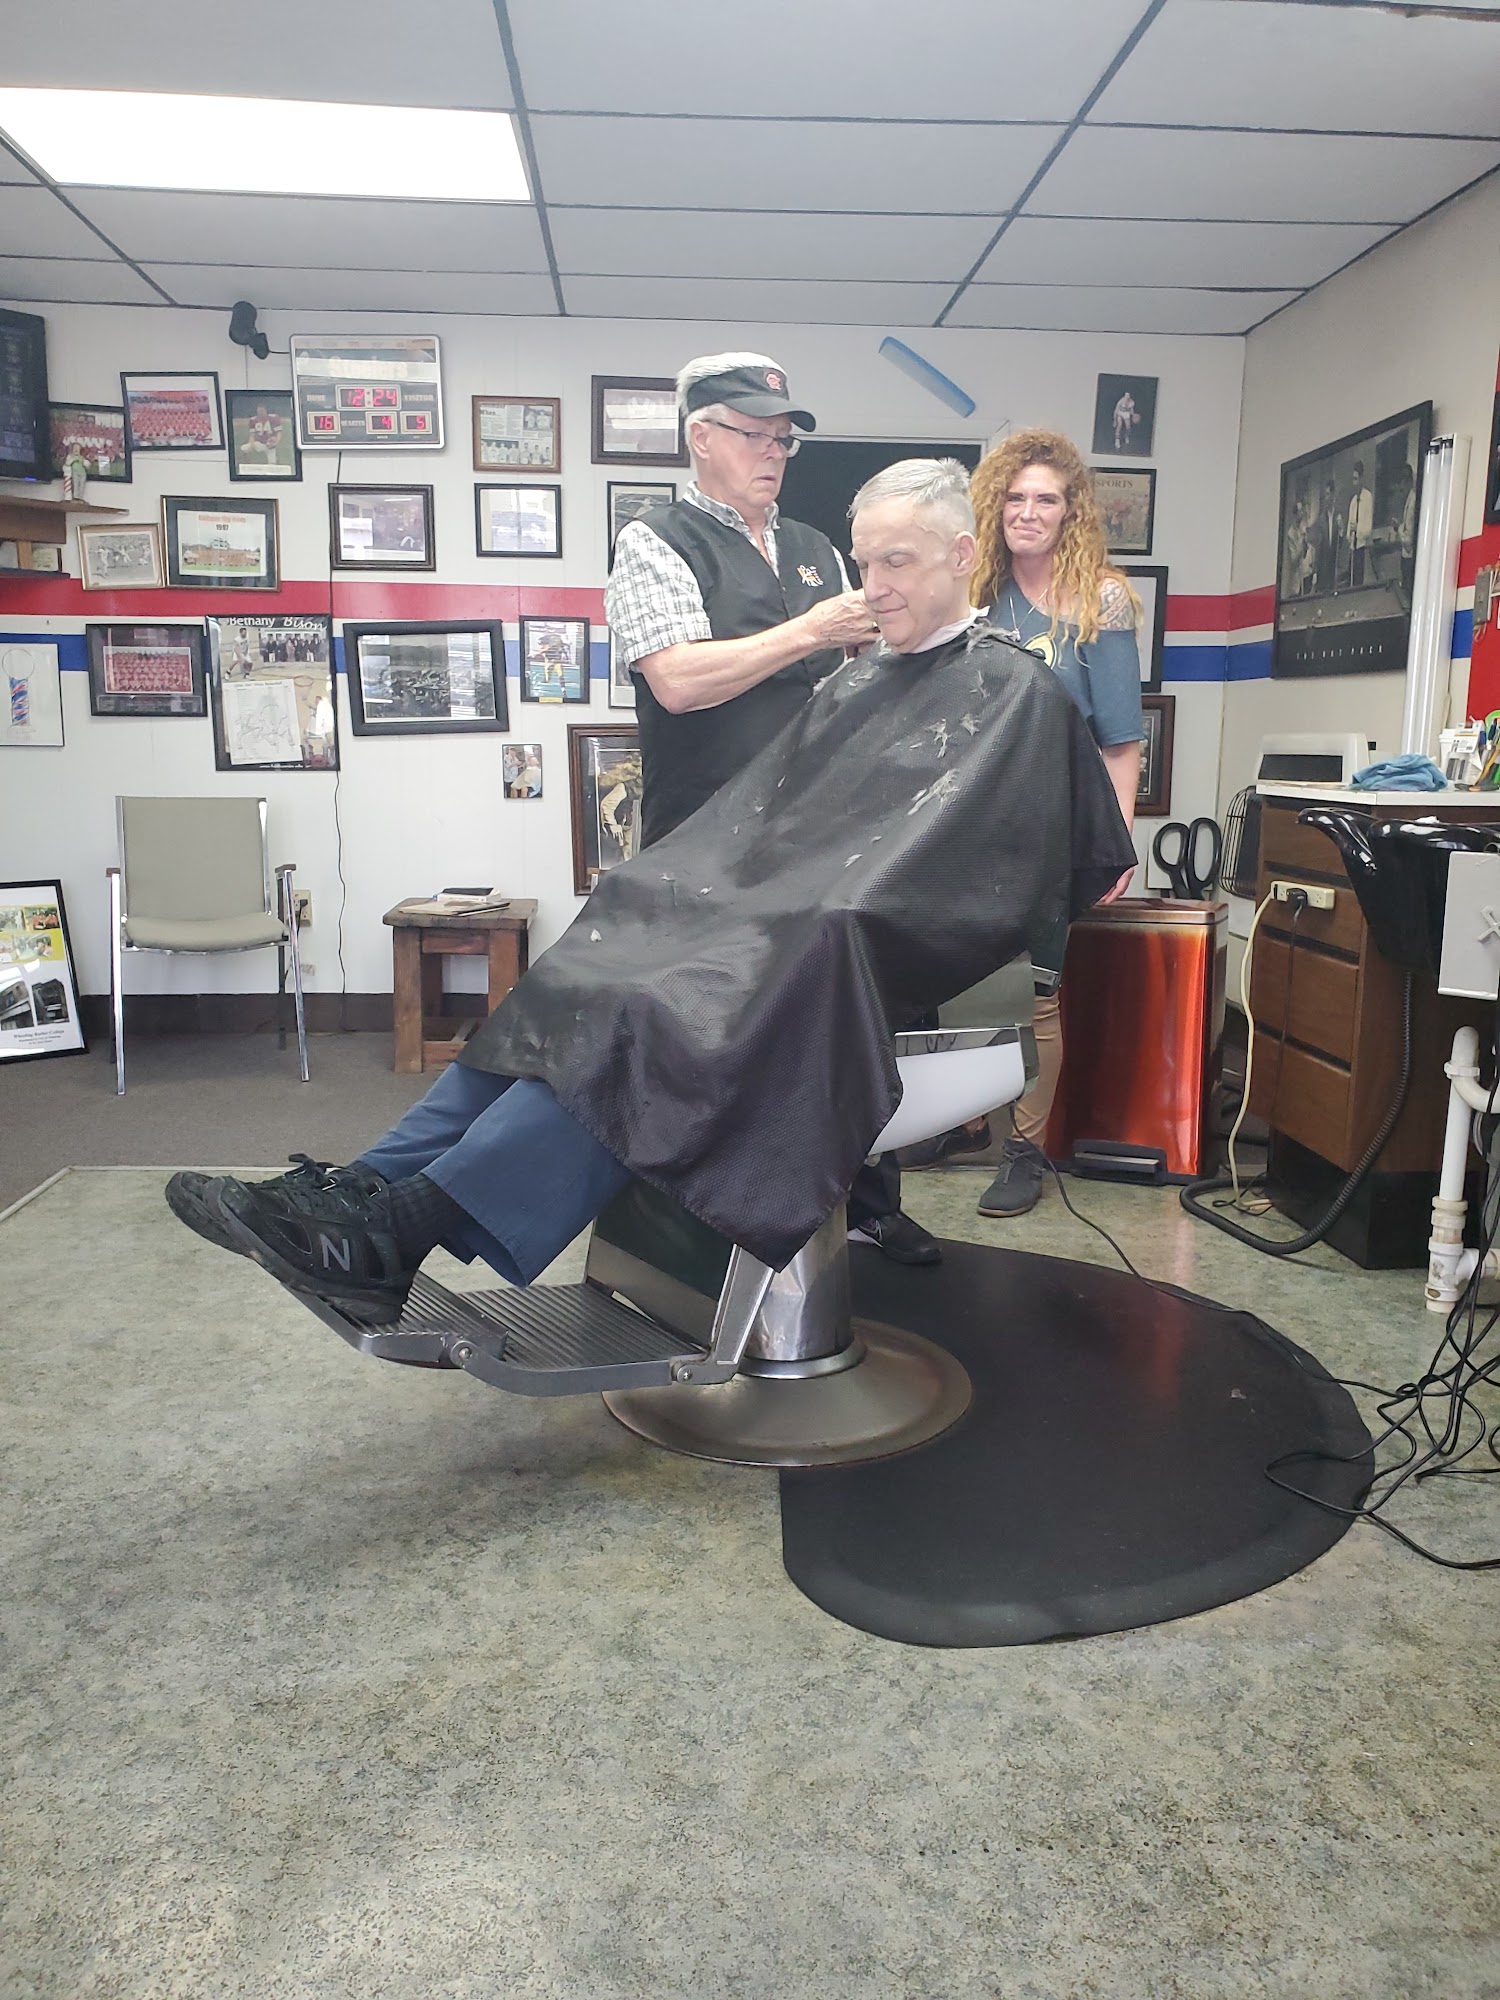 R Barber Shop 3018 Belmont St, Bellaire Ohio 43906